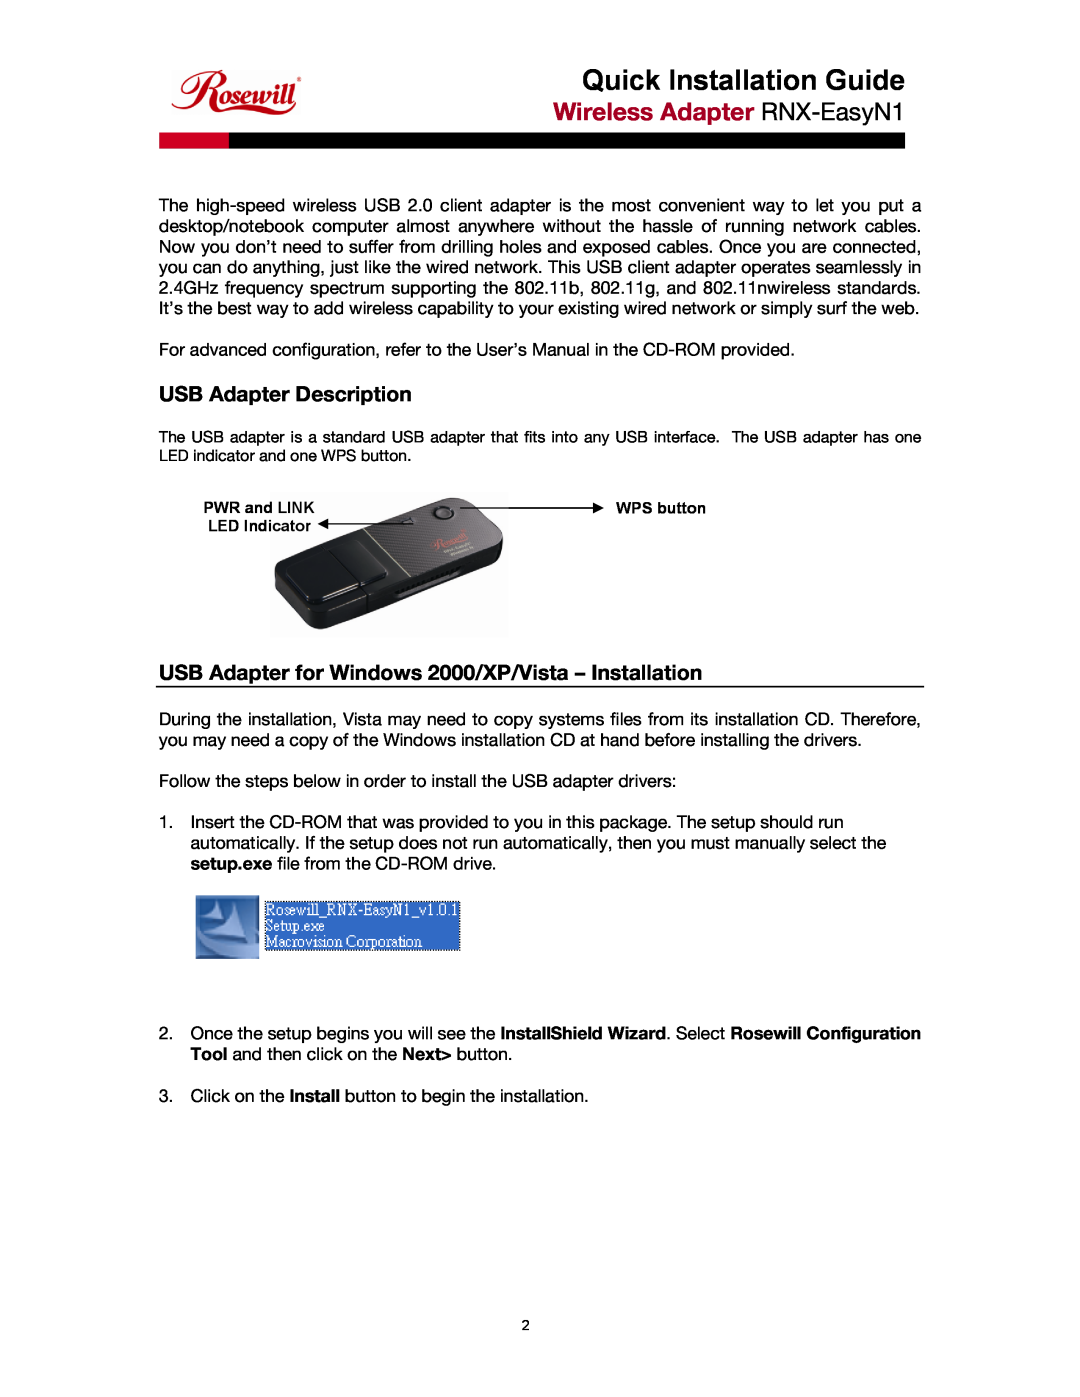 Rosewill manual Quick Installation Guide, Wireless Adapter RNX-EasyN1, USB Adapter Description 